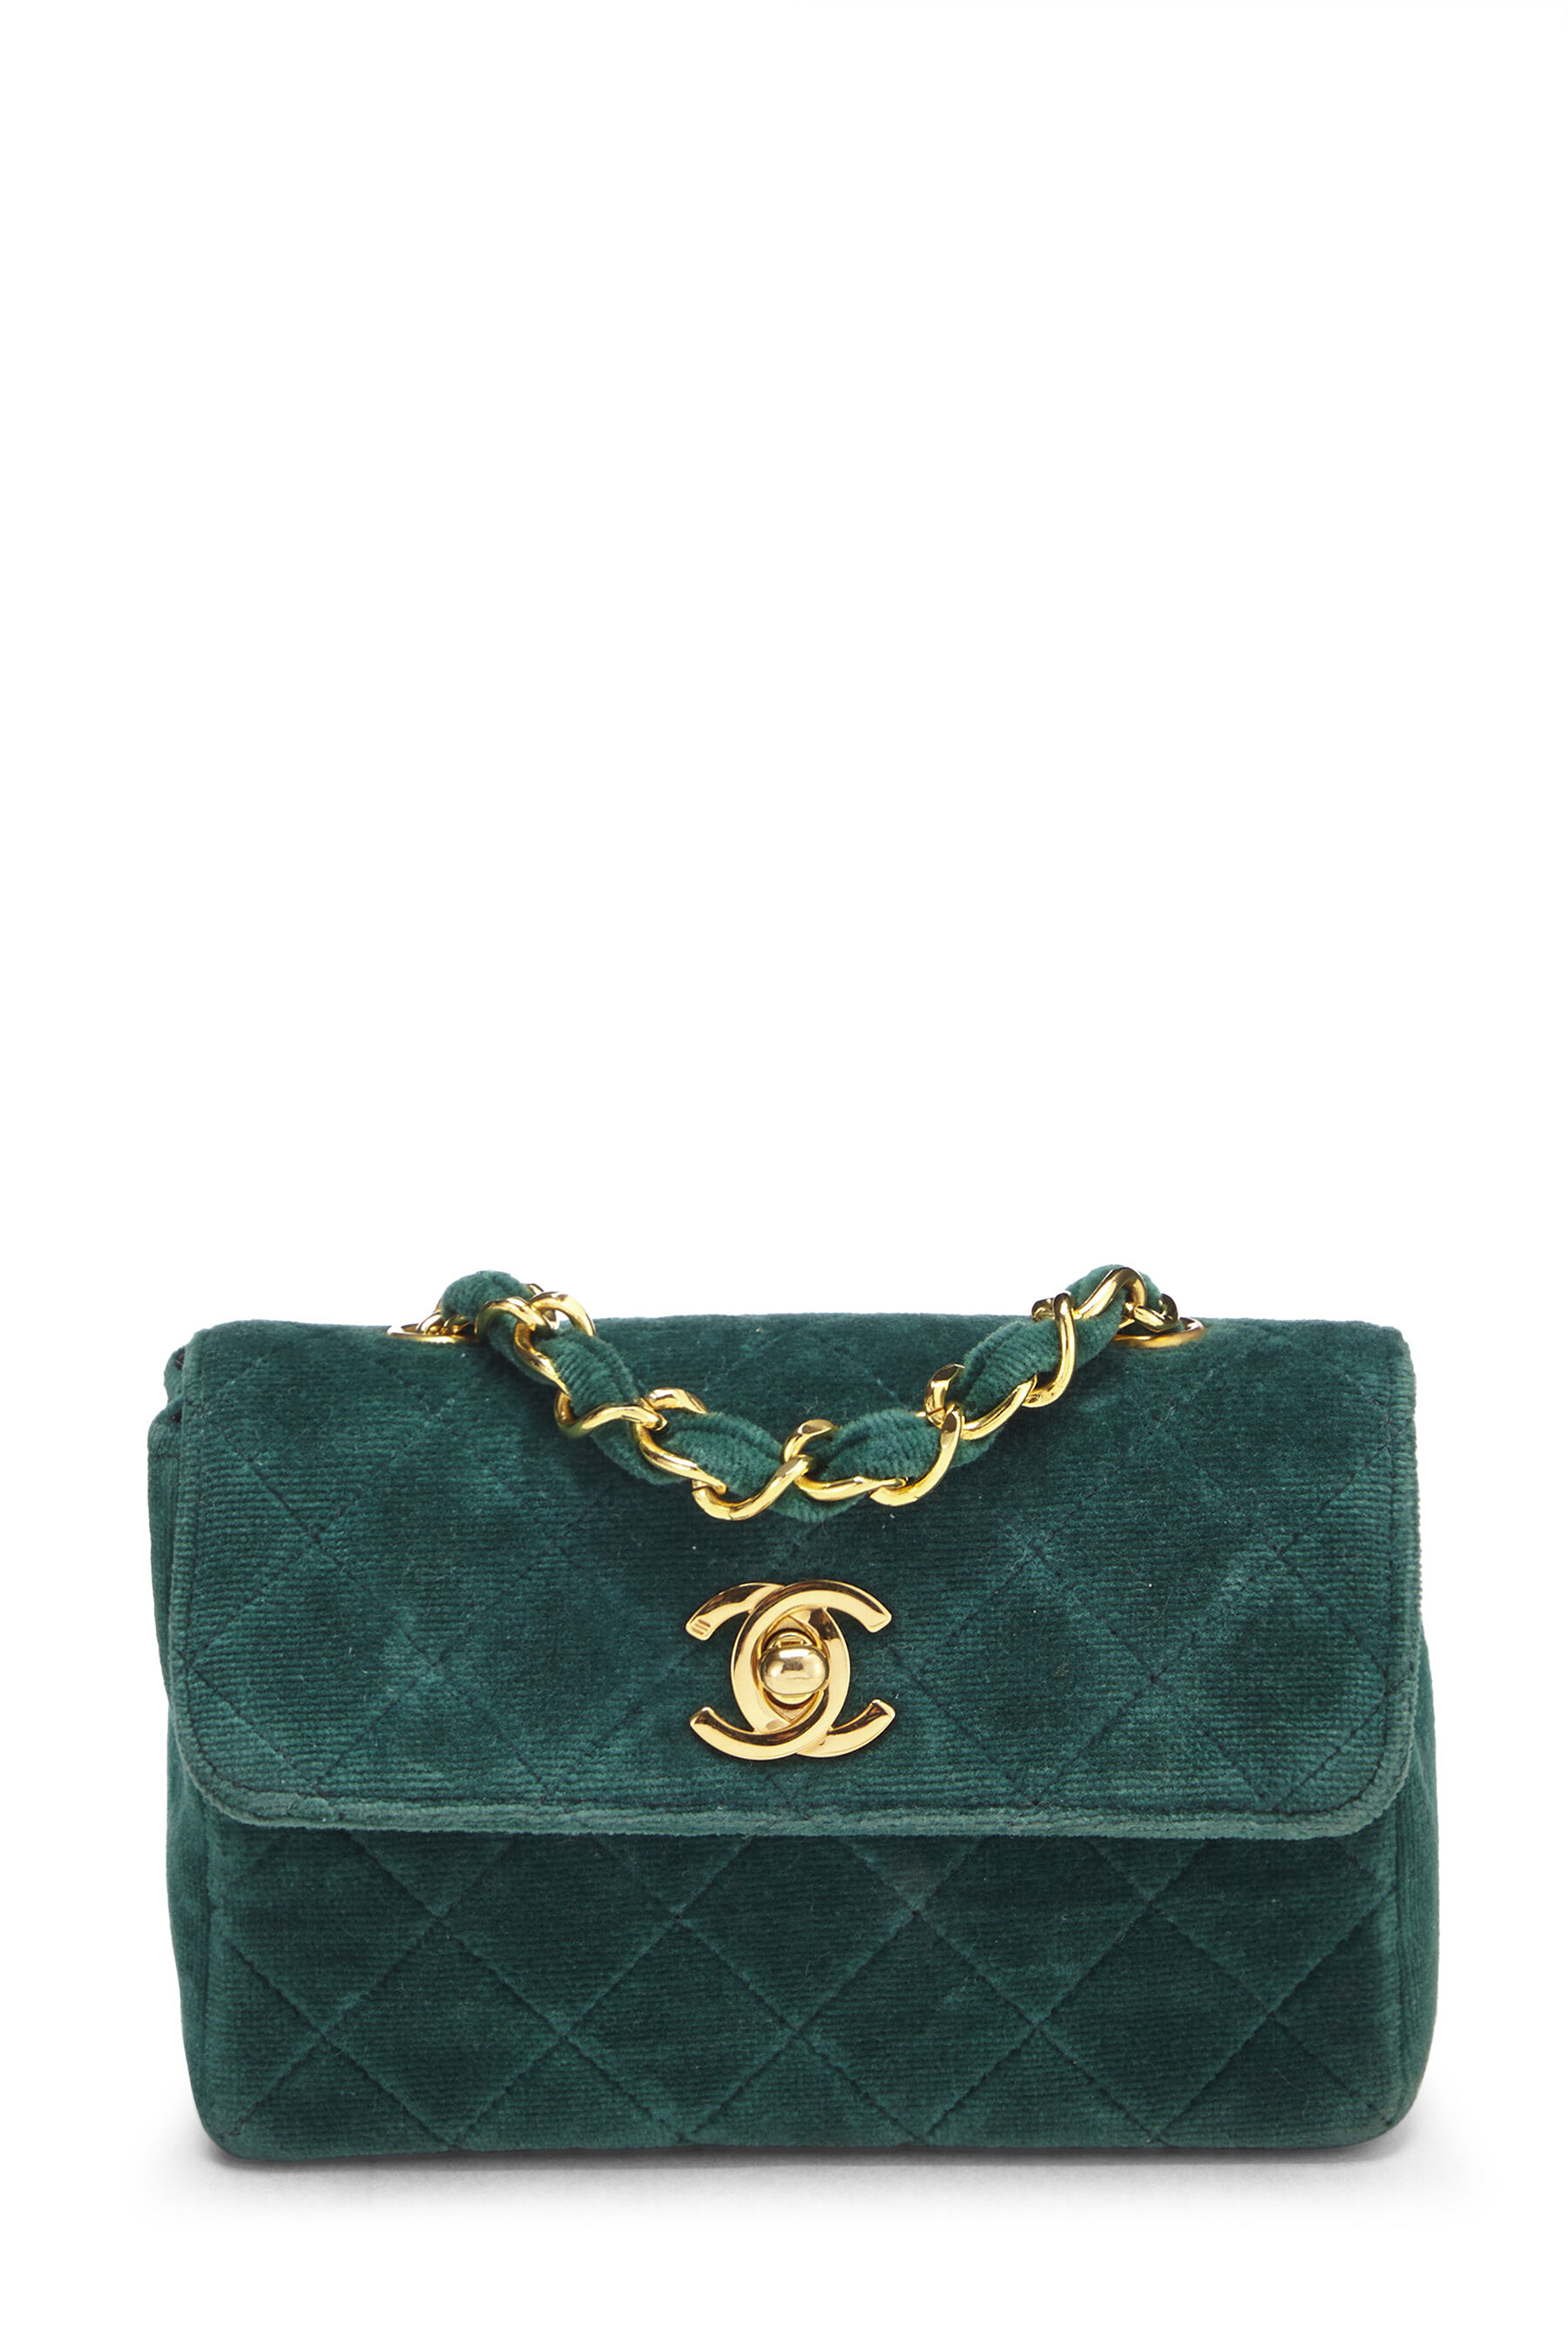 CHANEL Velvet Exterior Quilted Bags & Handbags for Women for sale